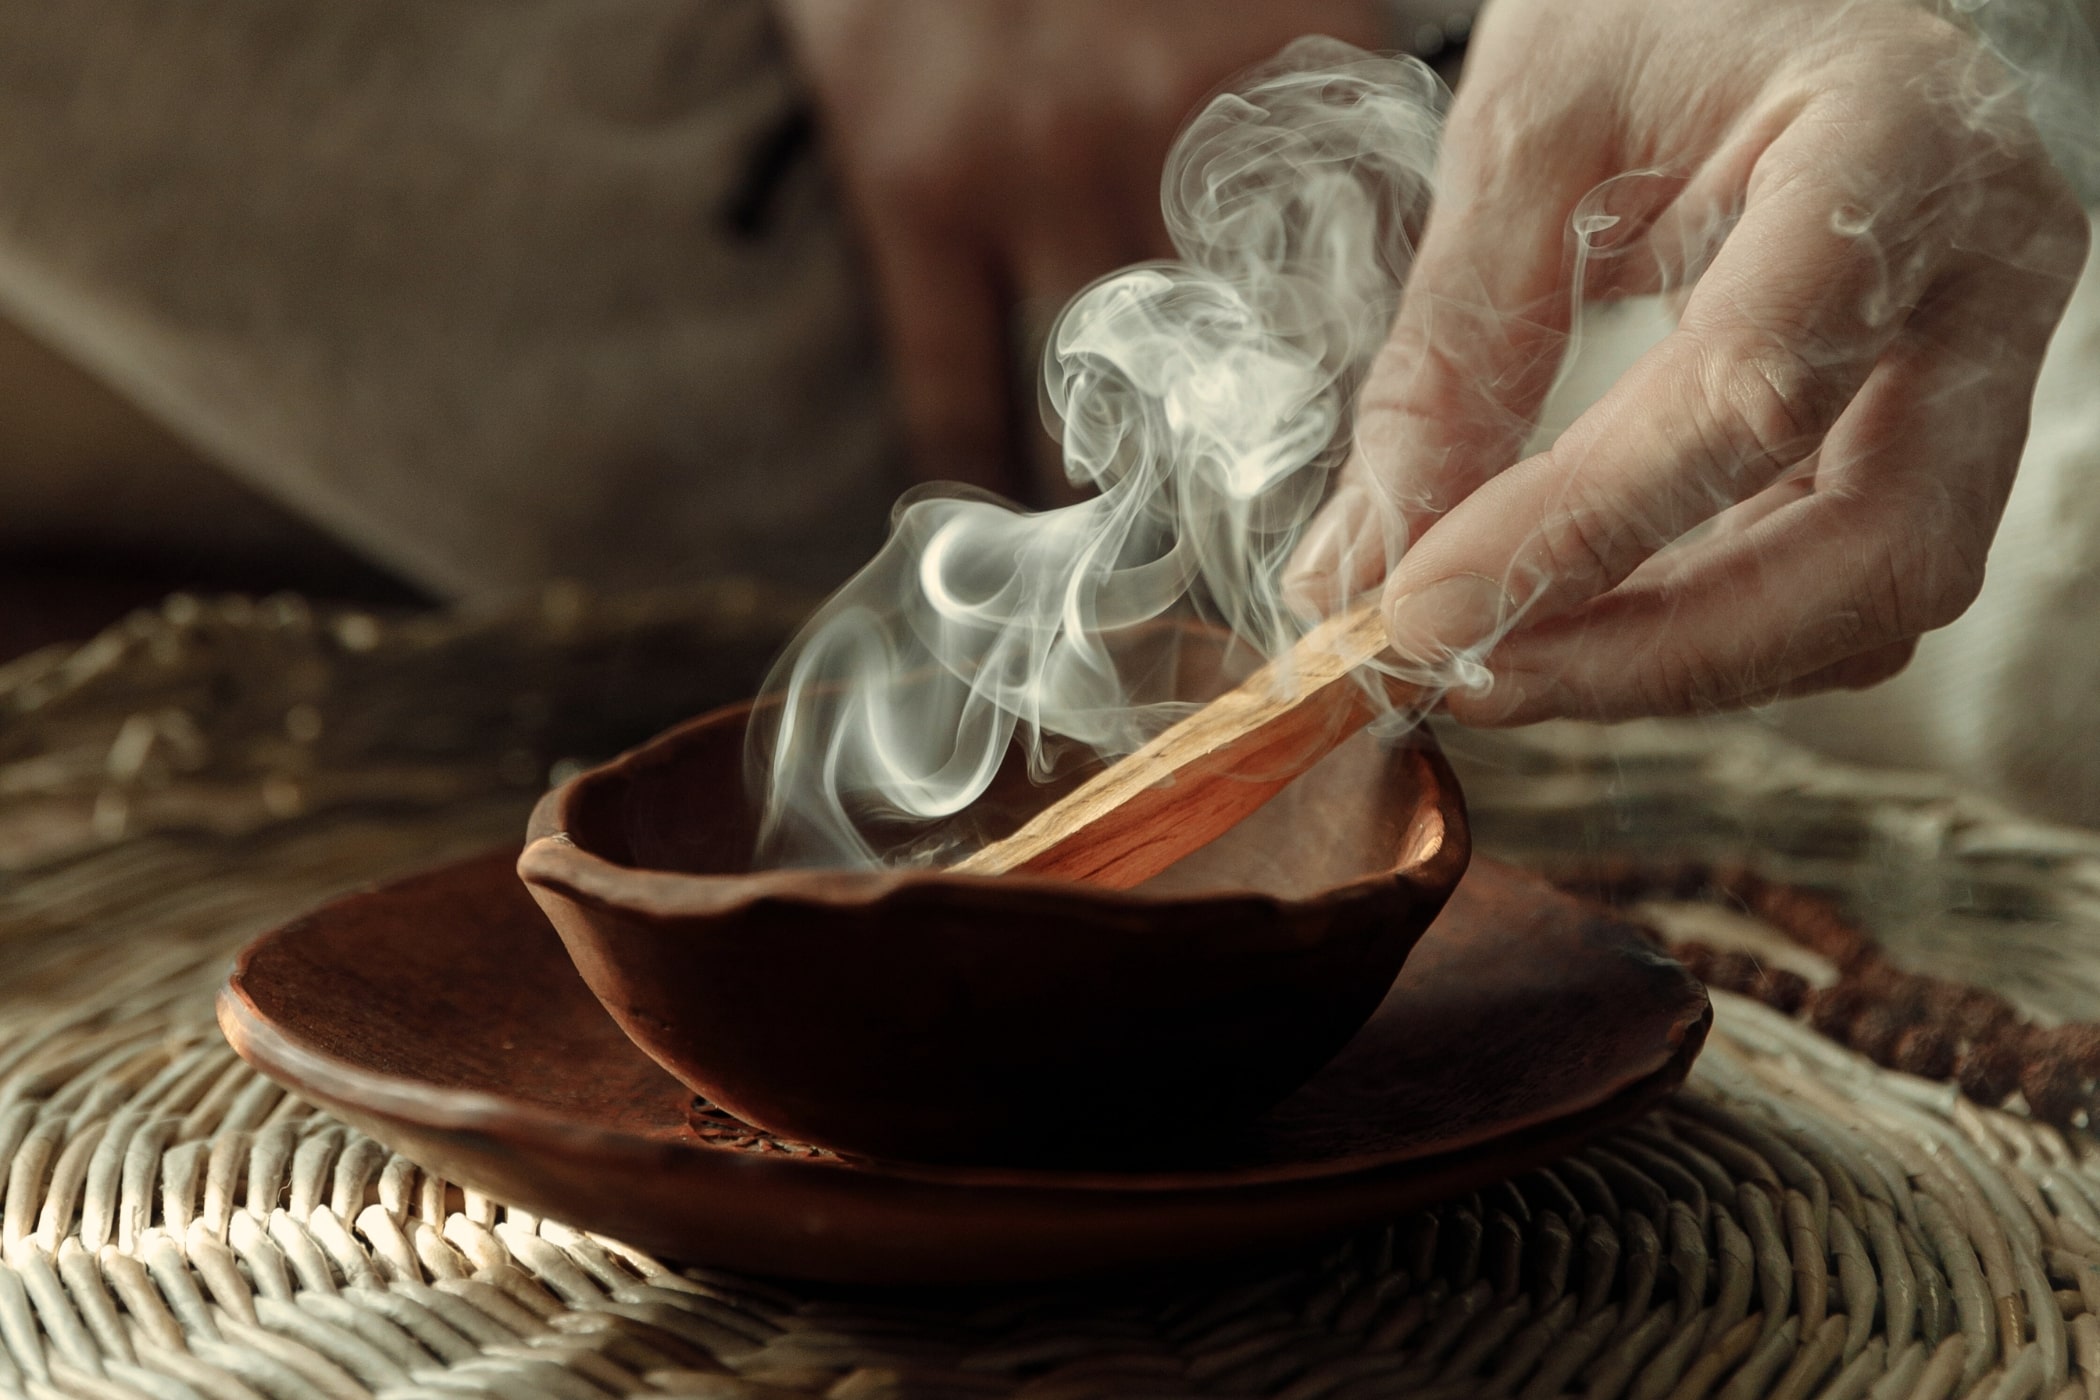 Palo Santo Essential Oil: Meditation, Uses and Benefits – Plant